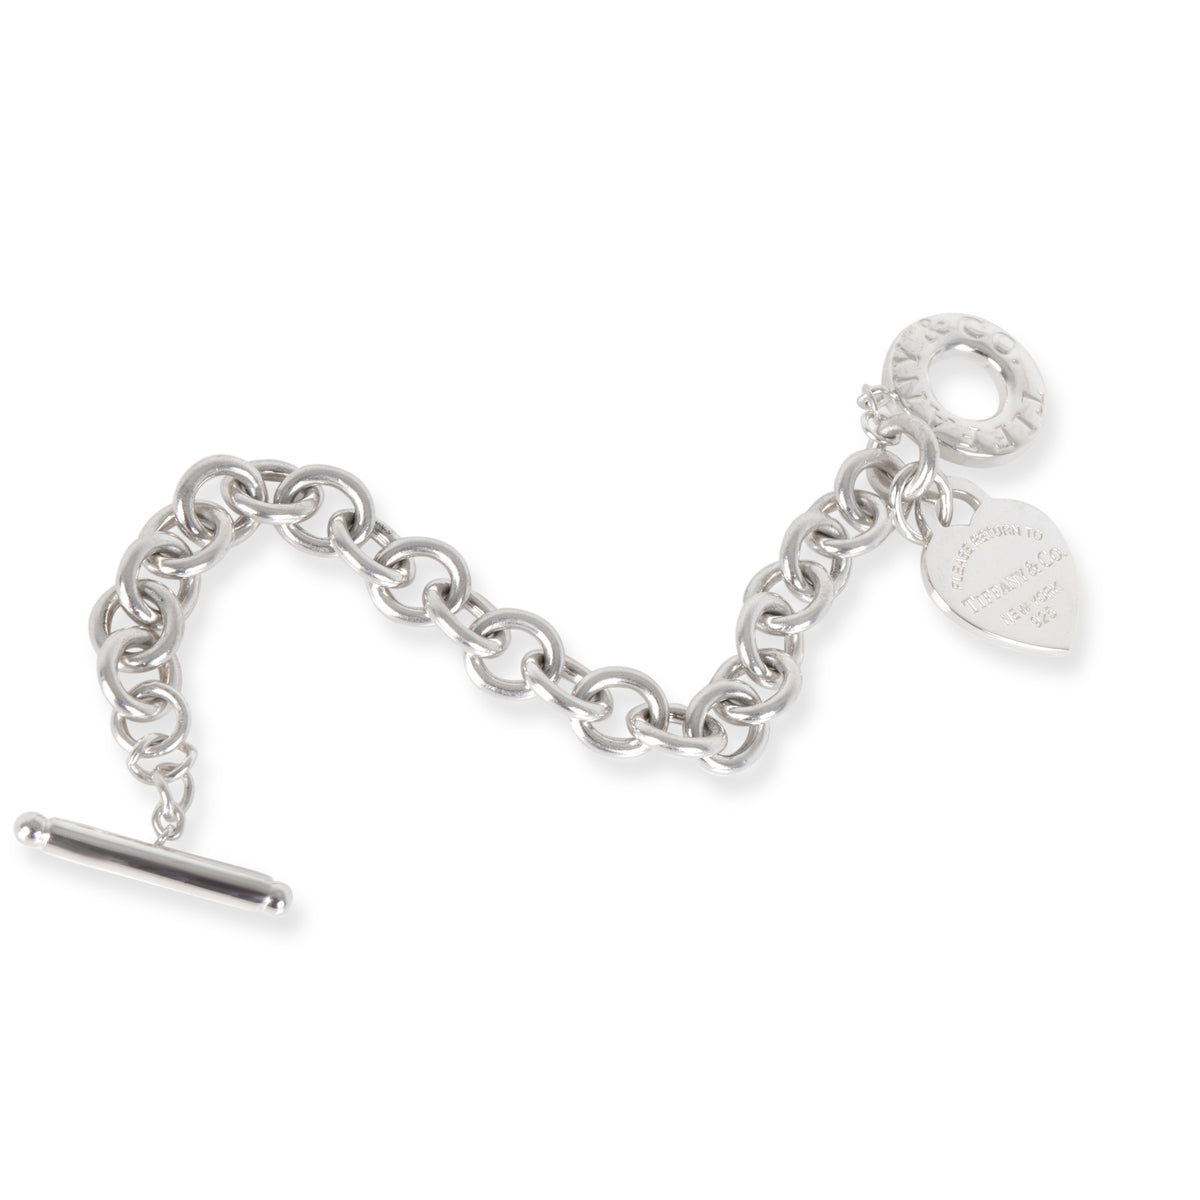 Tiffany & Co. Heart Tag Return to Tiffany Bracelet in  Sterling Silver